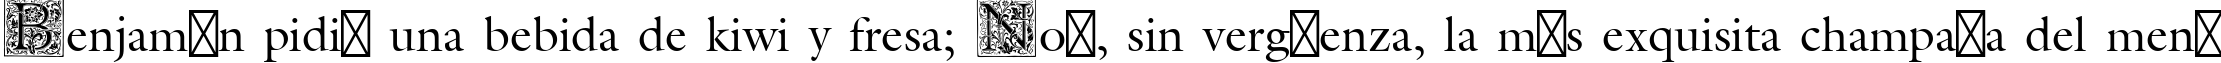 Пример написания шрифтом Medieval Initial Two текста на испанском